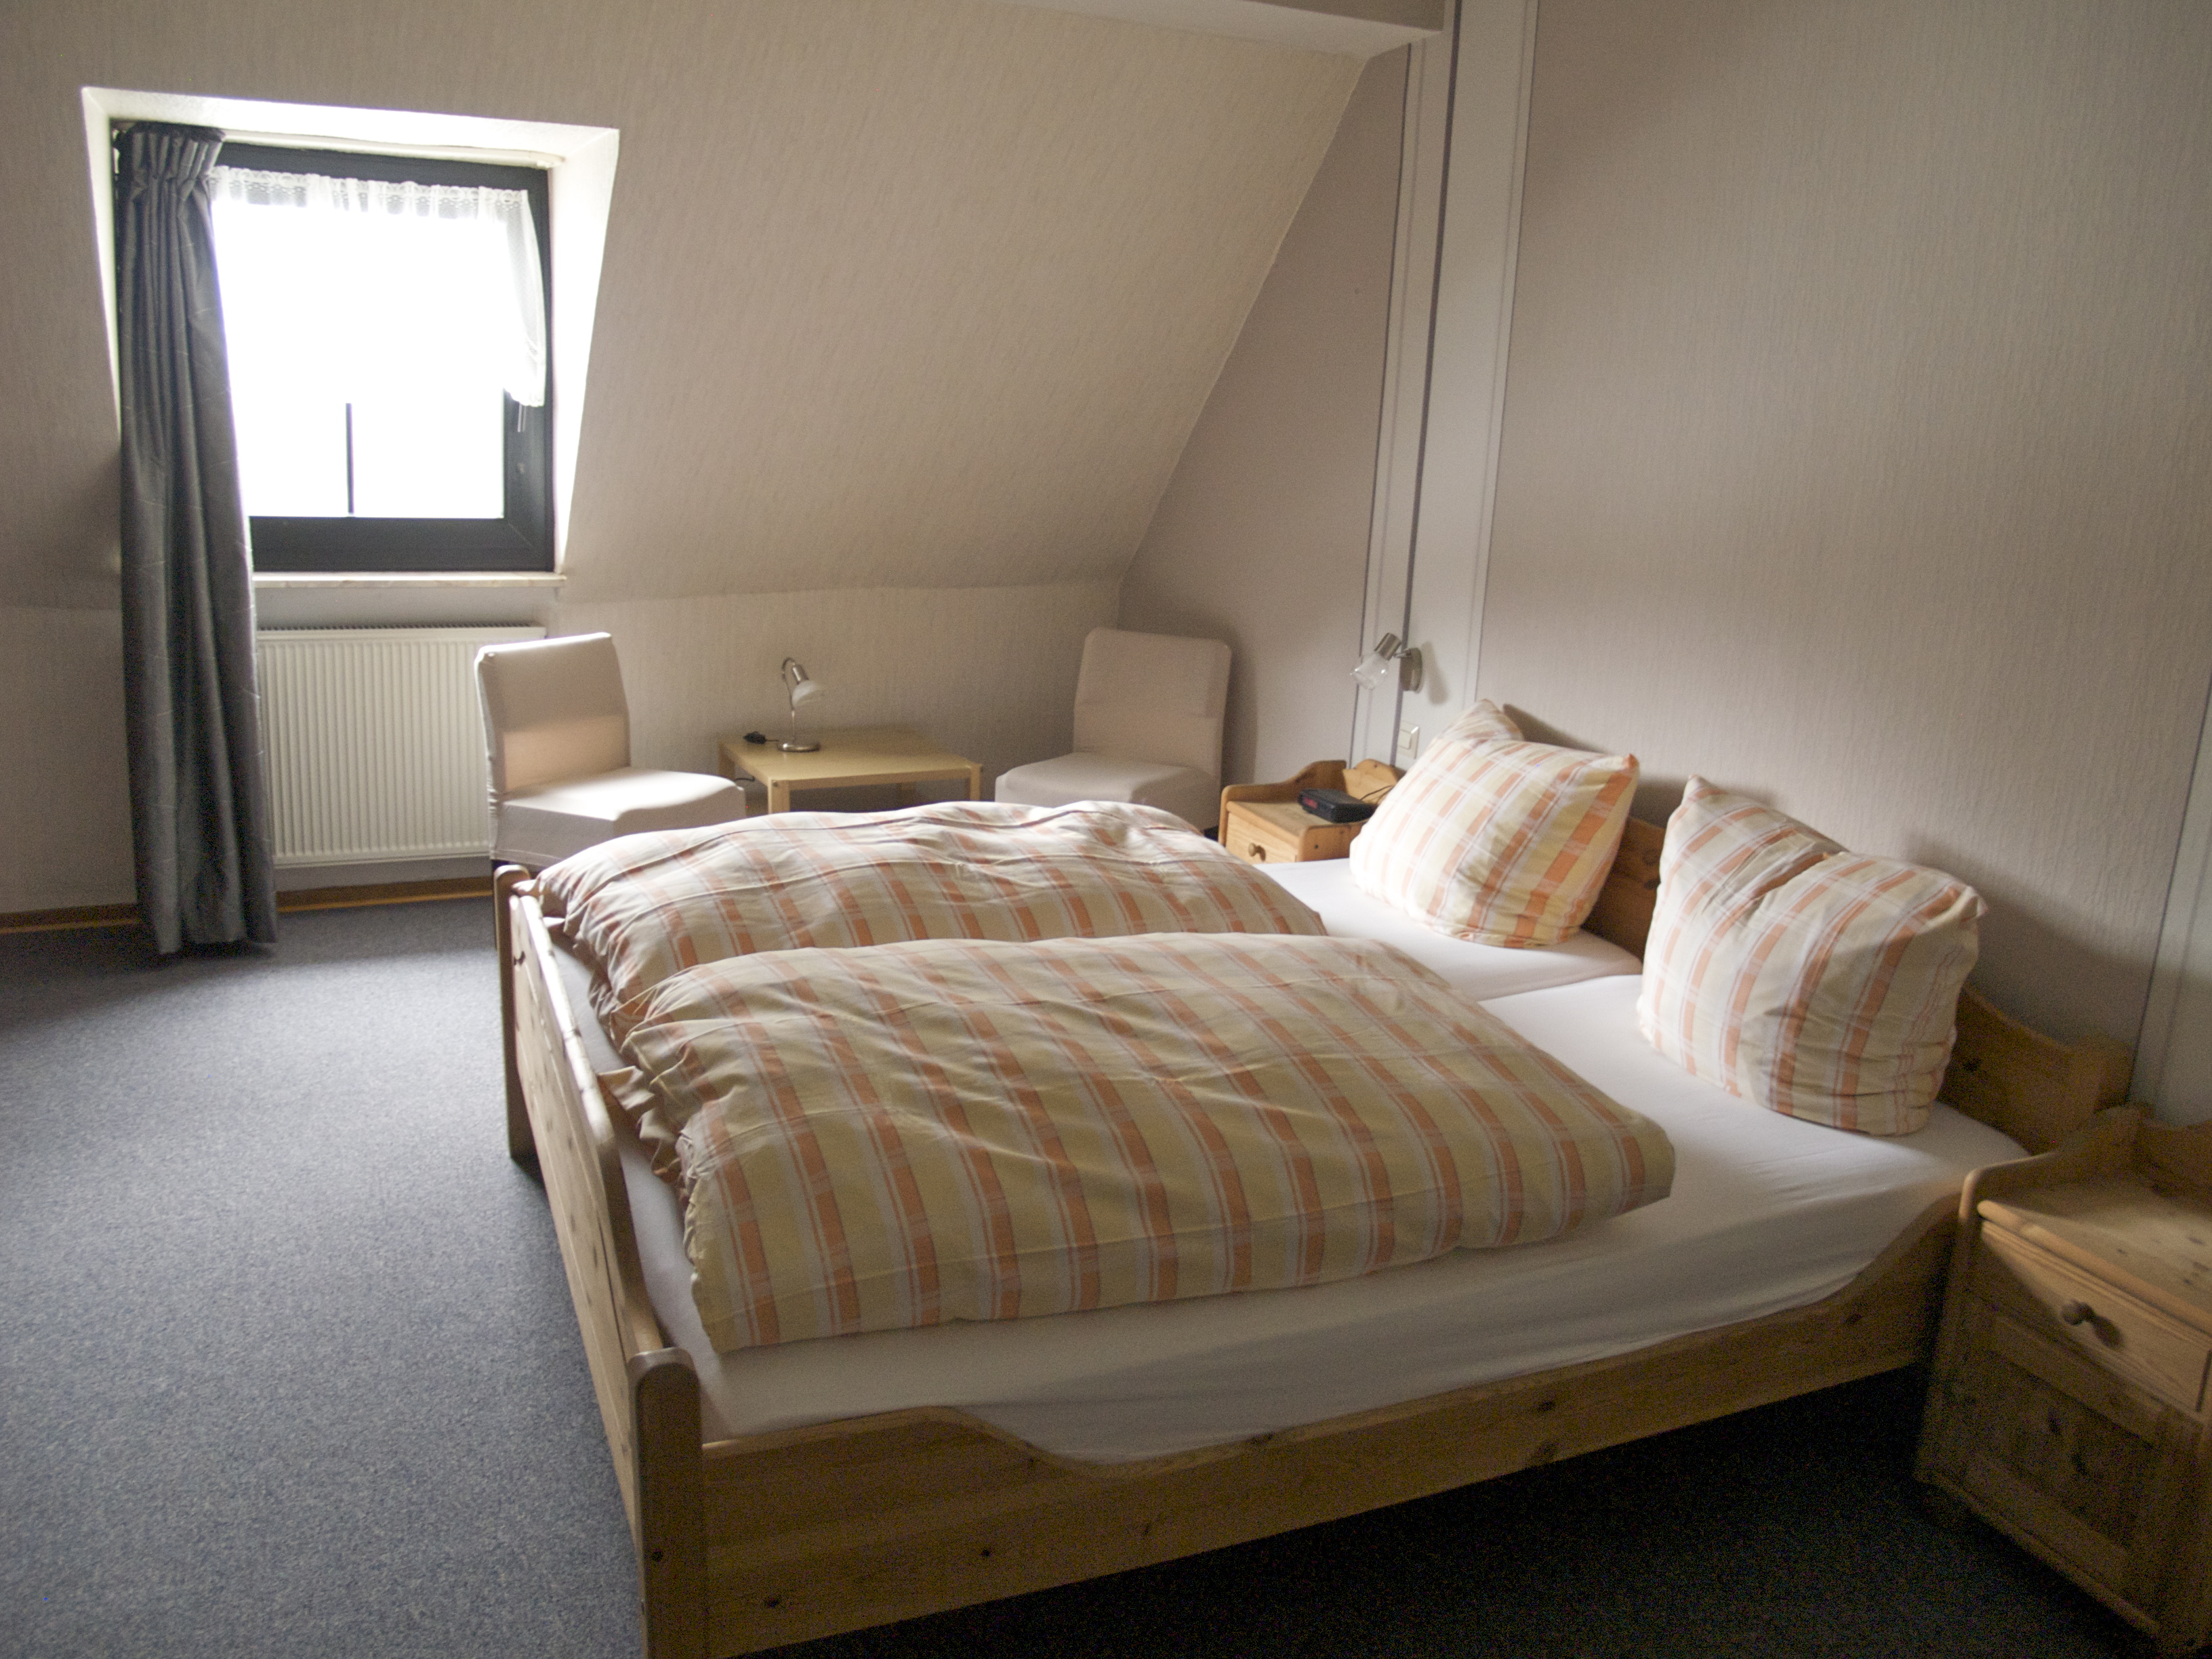 Zimmer ab 32 euro